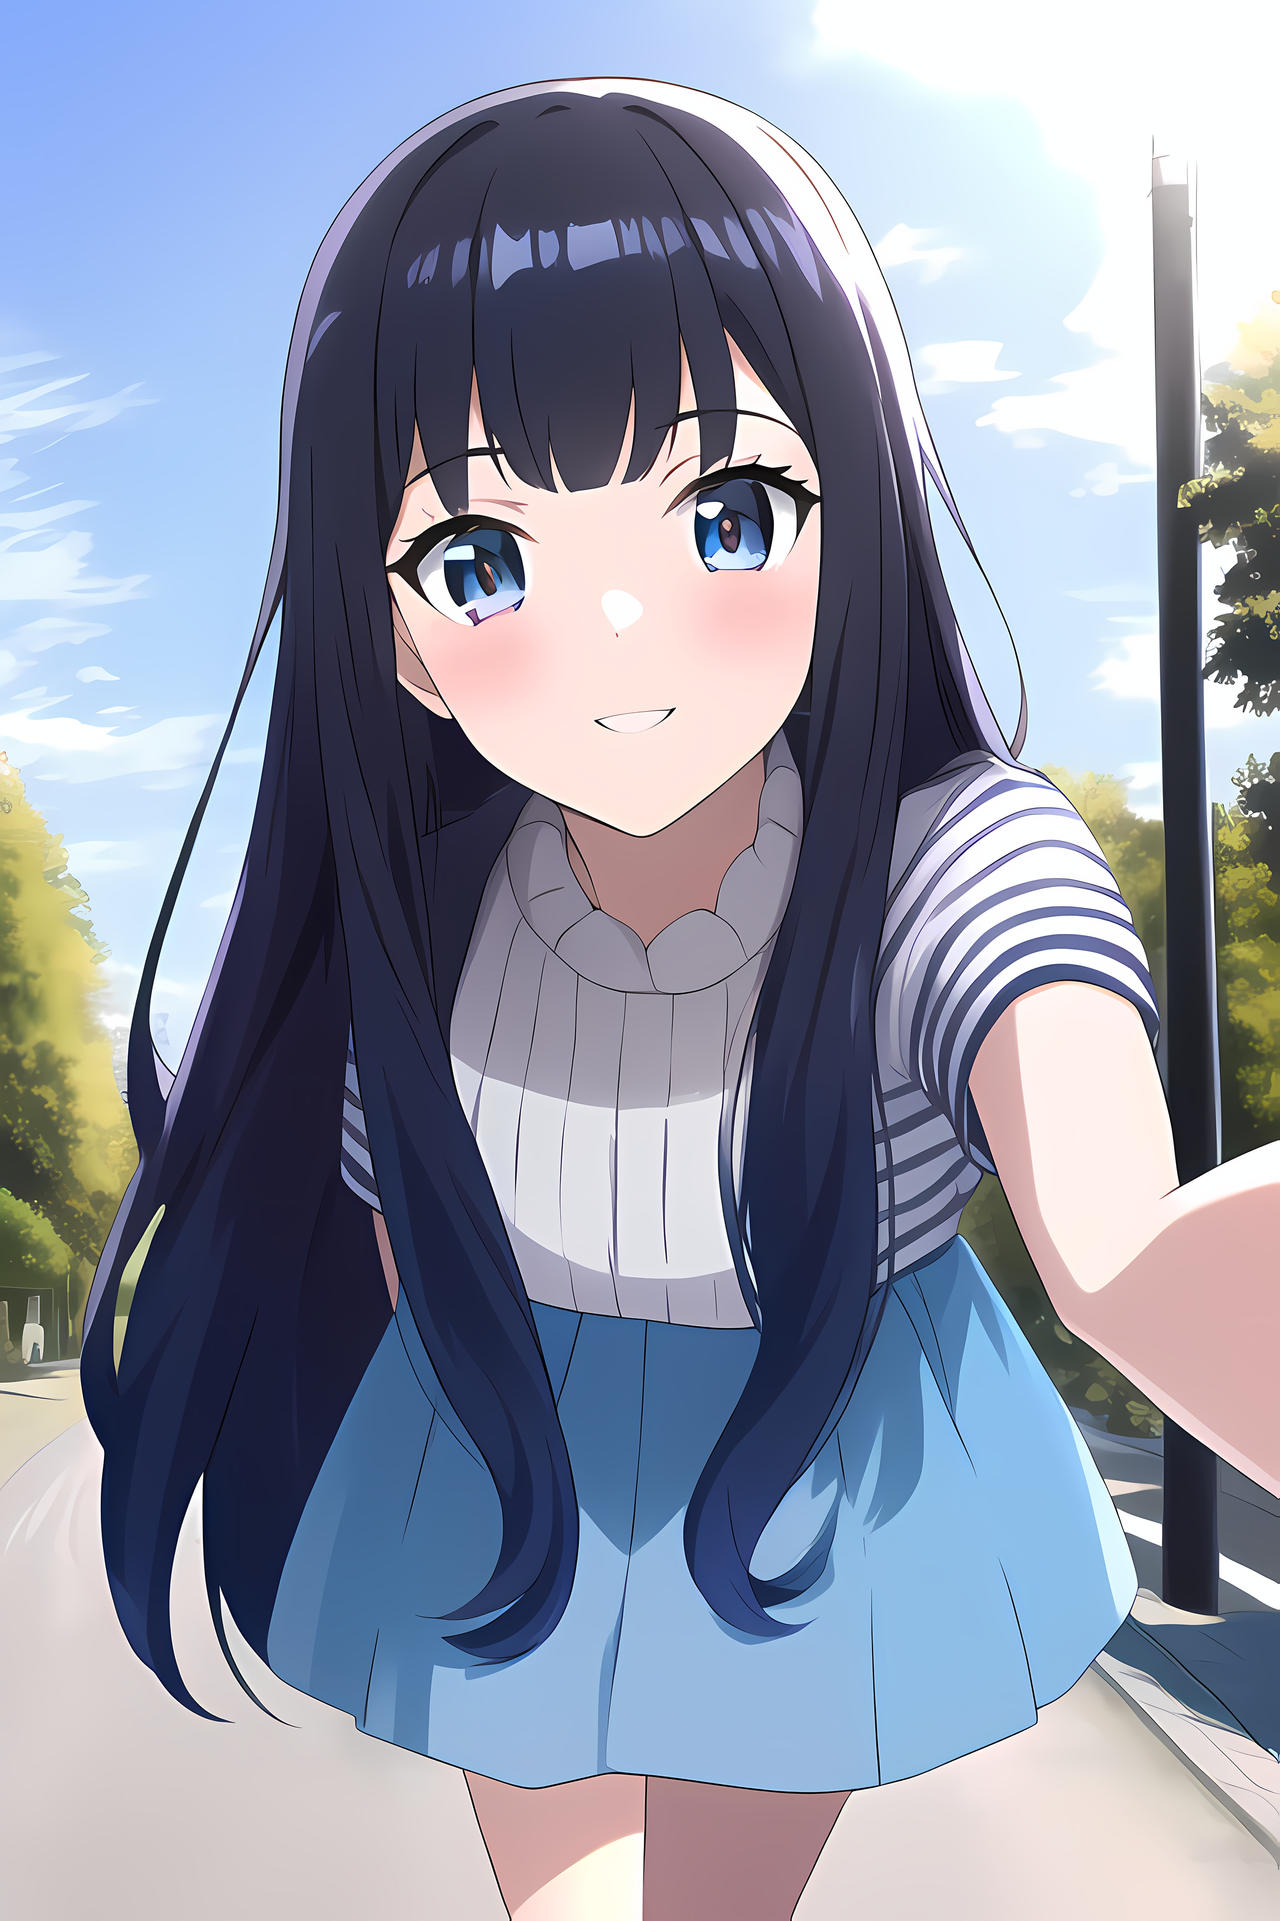 NovelAI Anime Girl Selfie by DarkPrncsAI on DeviantArt